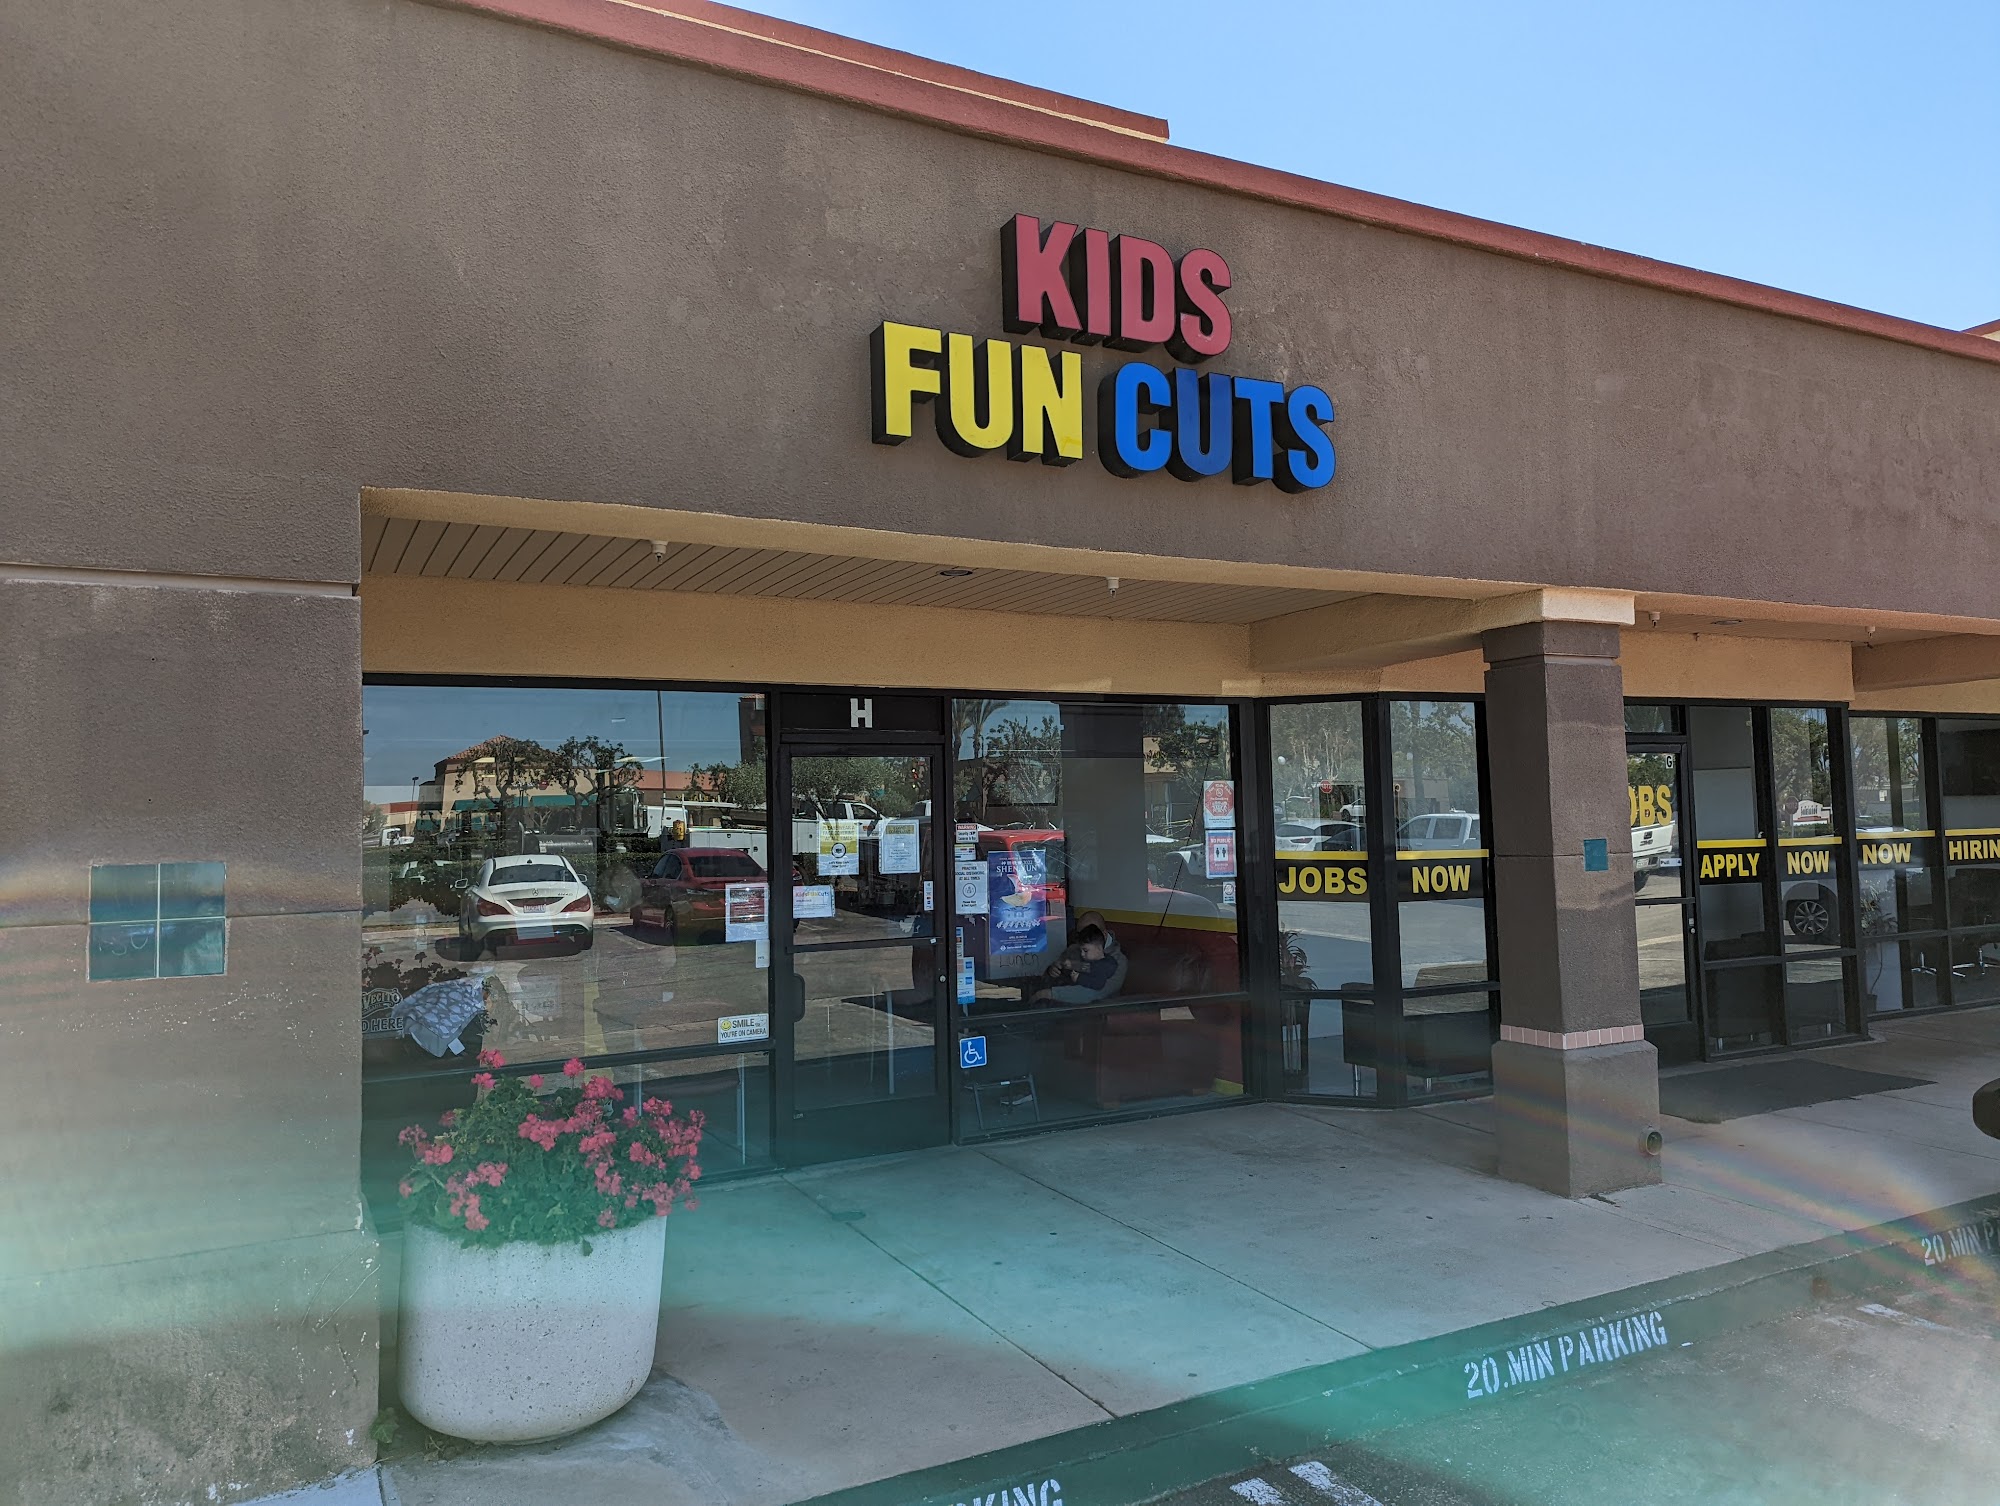 Kids Fun Cuts - Children’s Haircuts & Ear Piercings